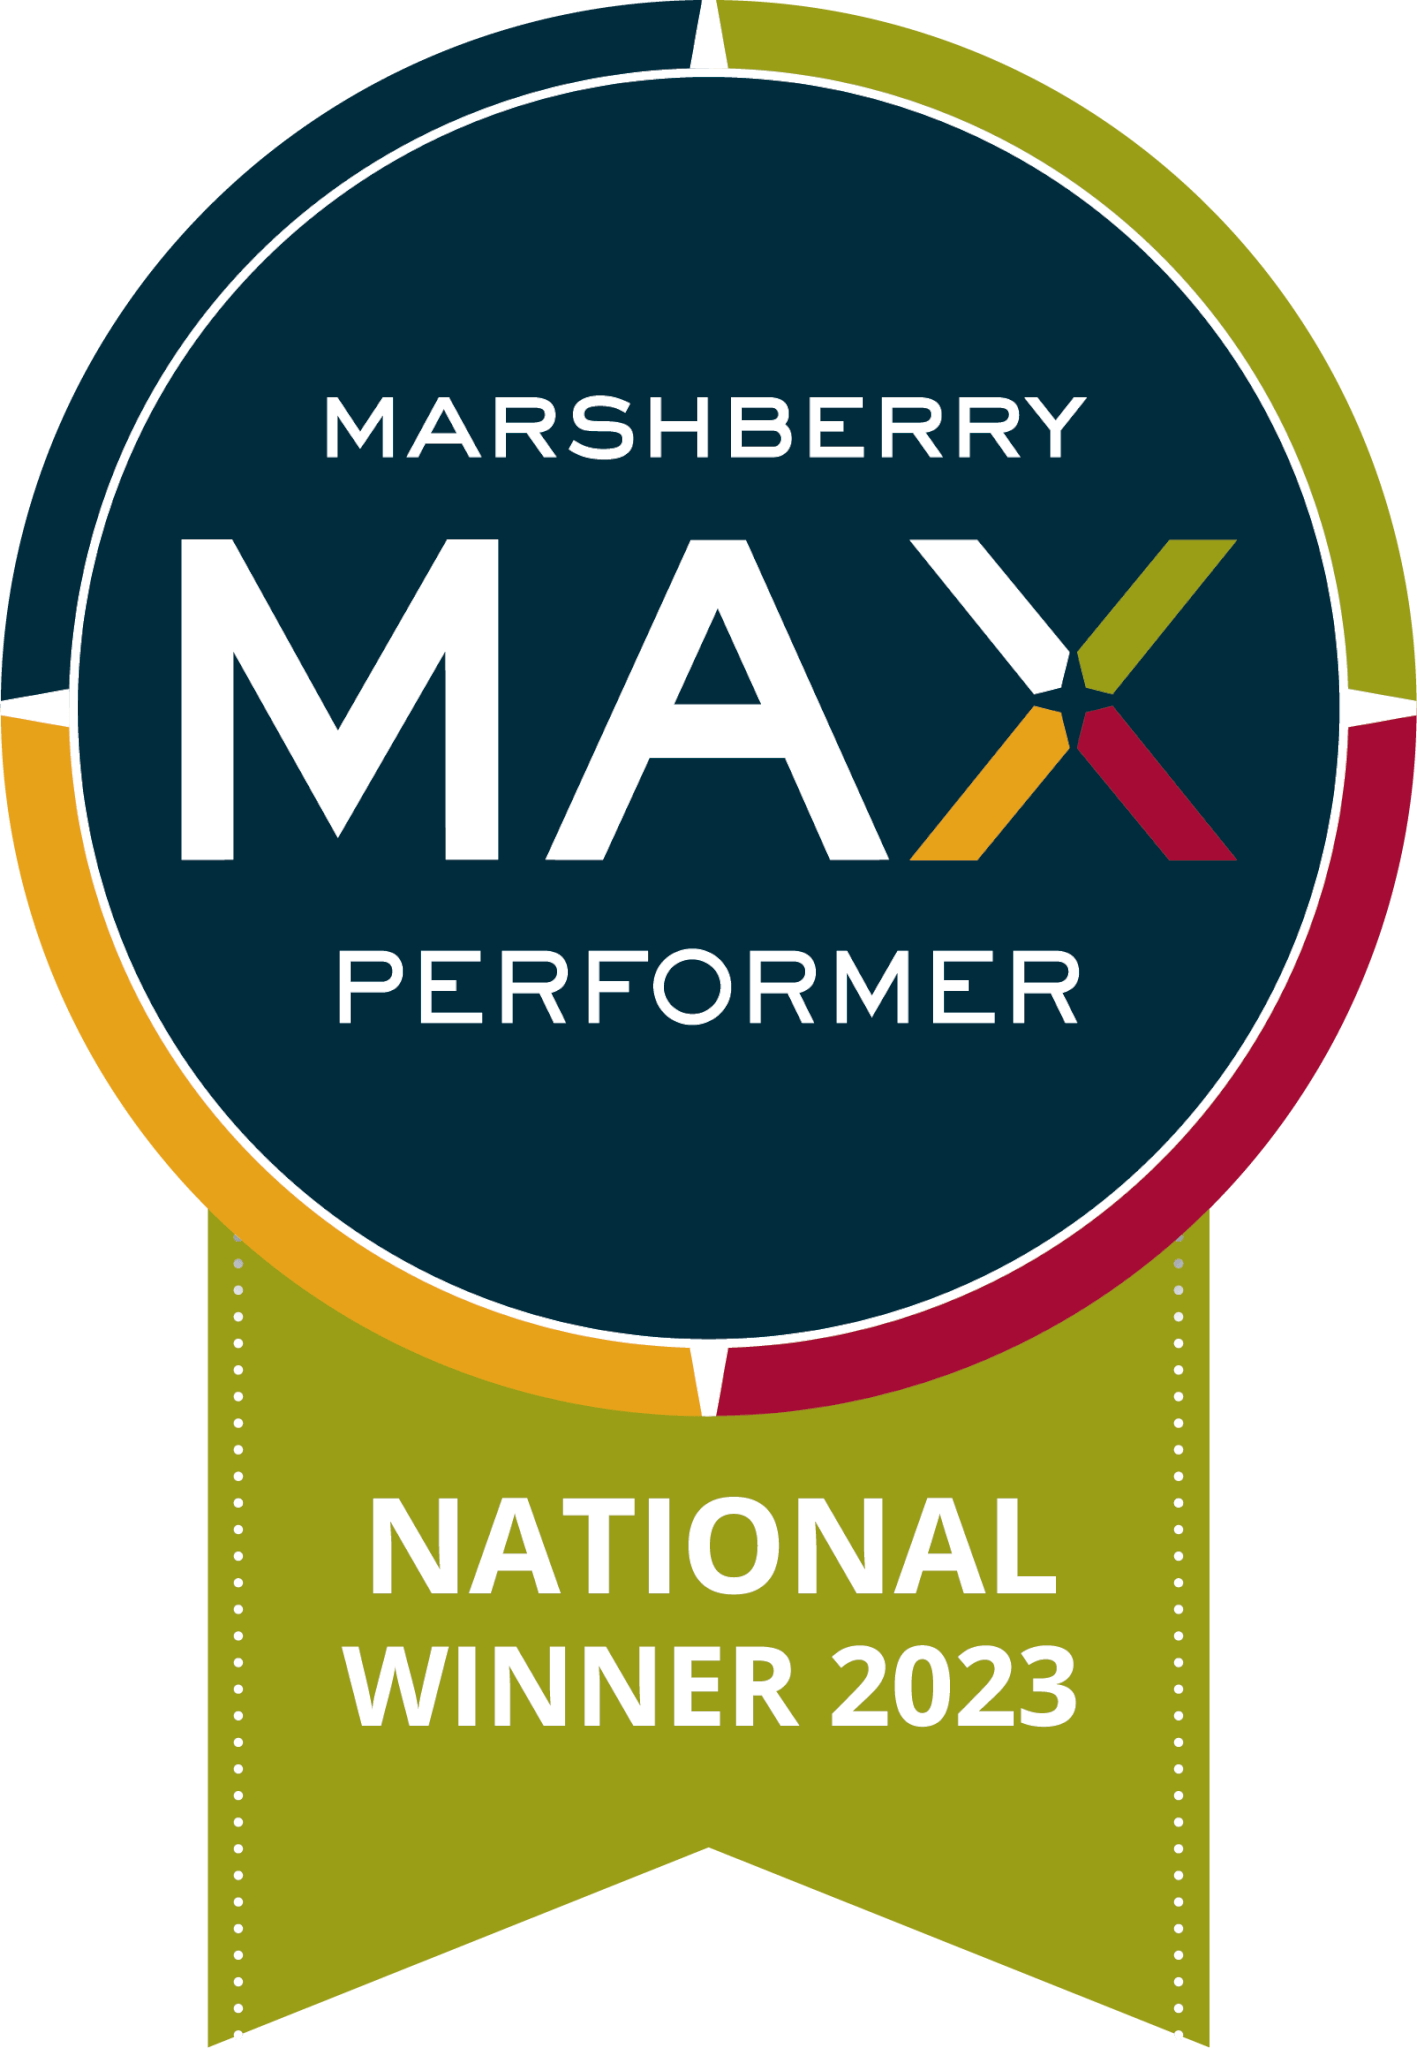 Mashberry MAX performer logo